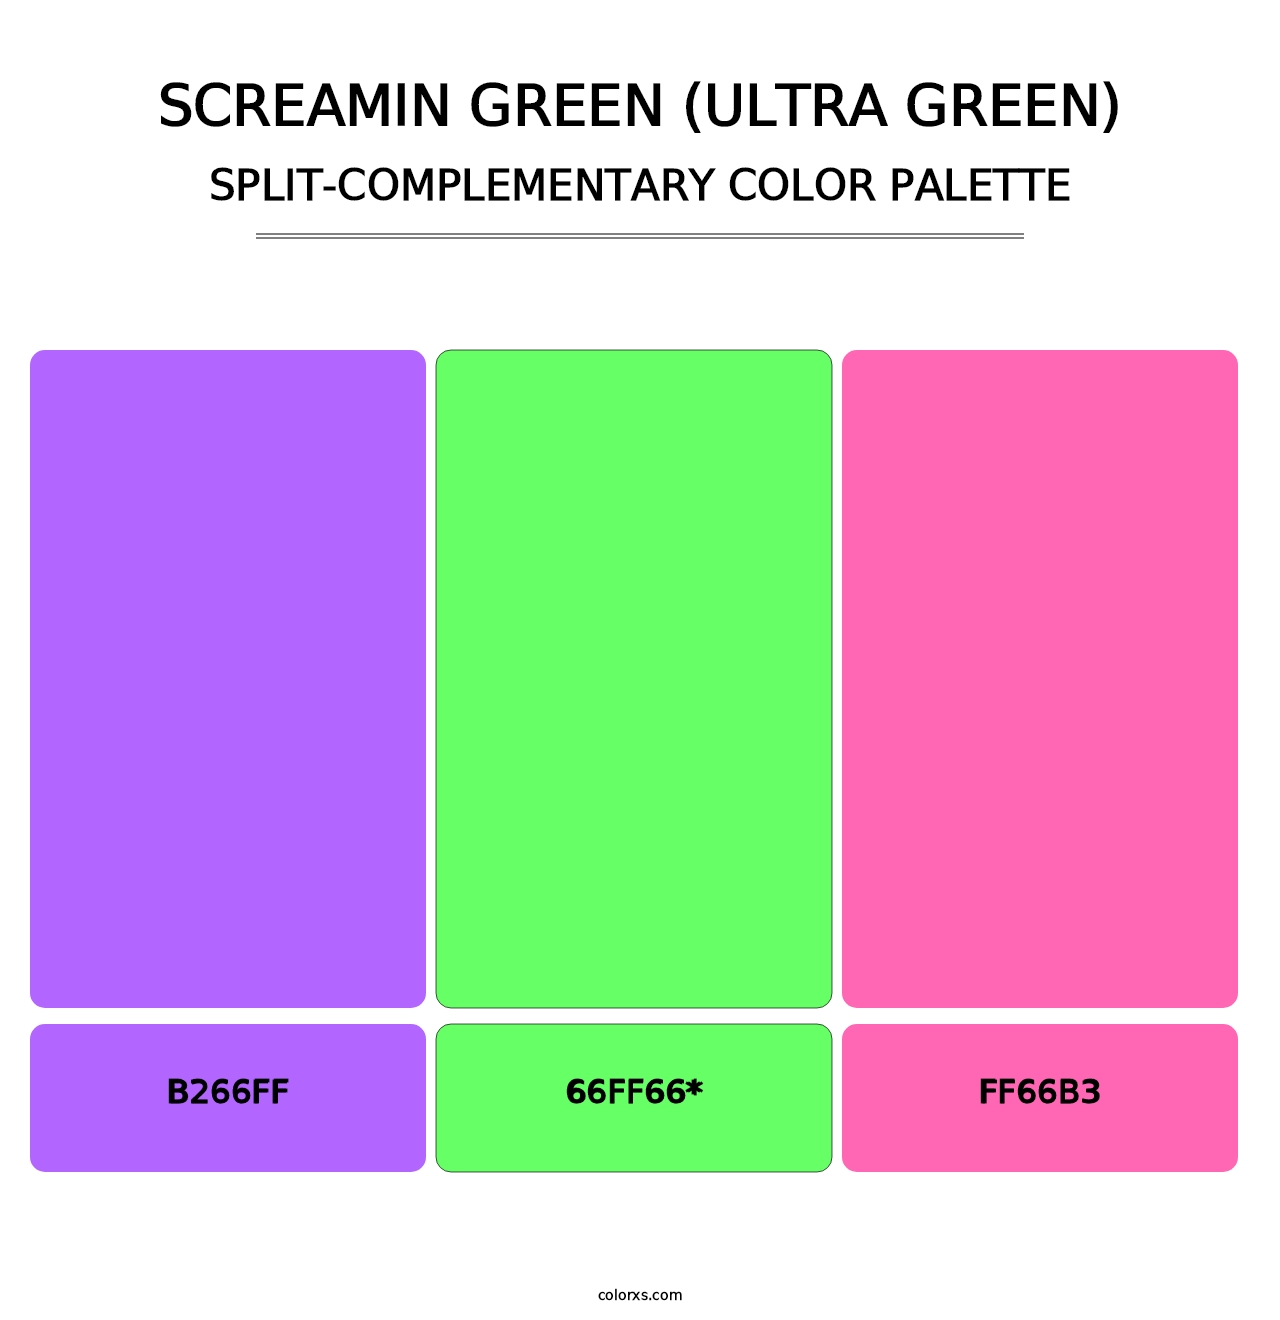 Screamin Green (Ultra Green) - Split-Complementary Color Palette